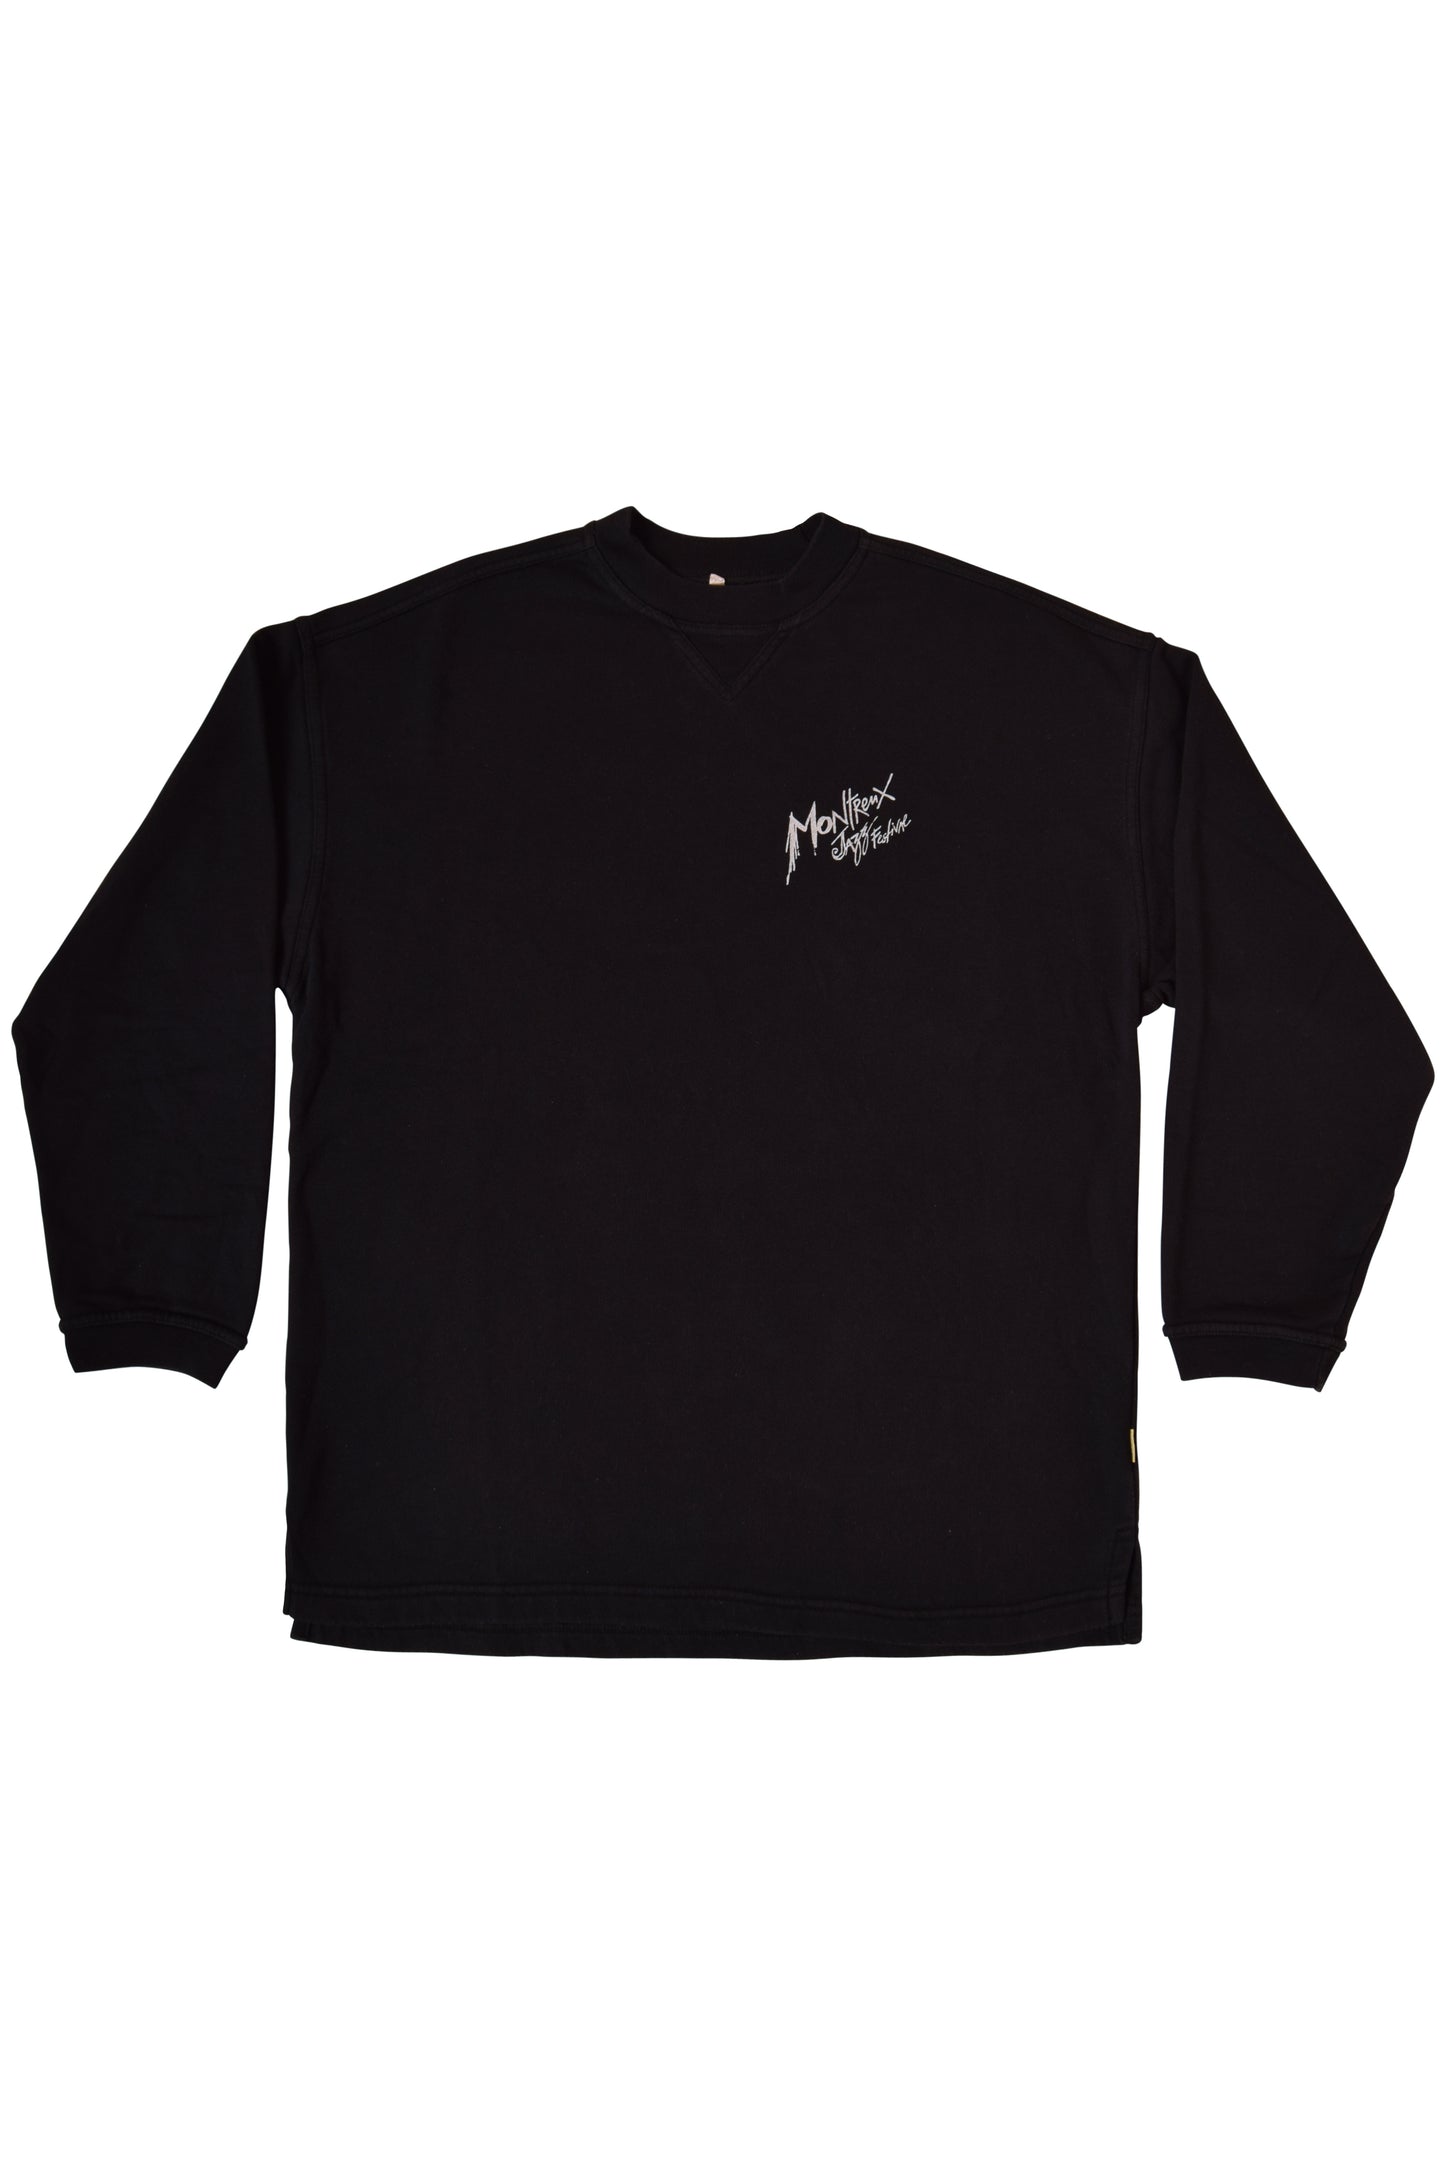 Montreux Jazz Festival 1995 Sweatshirt Designed by David Bowie Black Switcher Size L